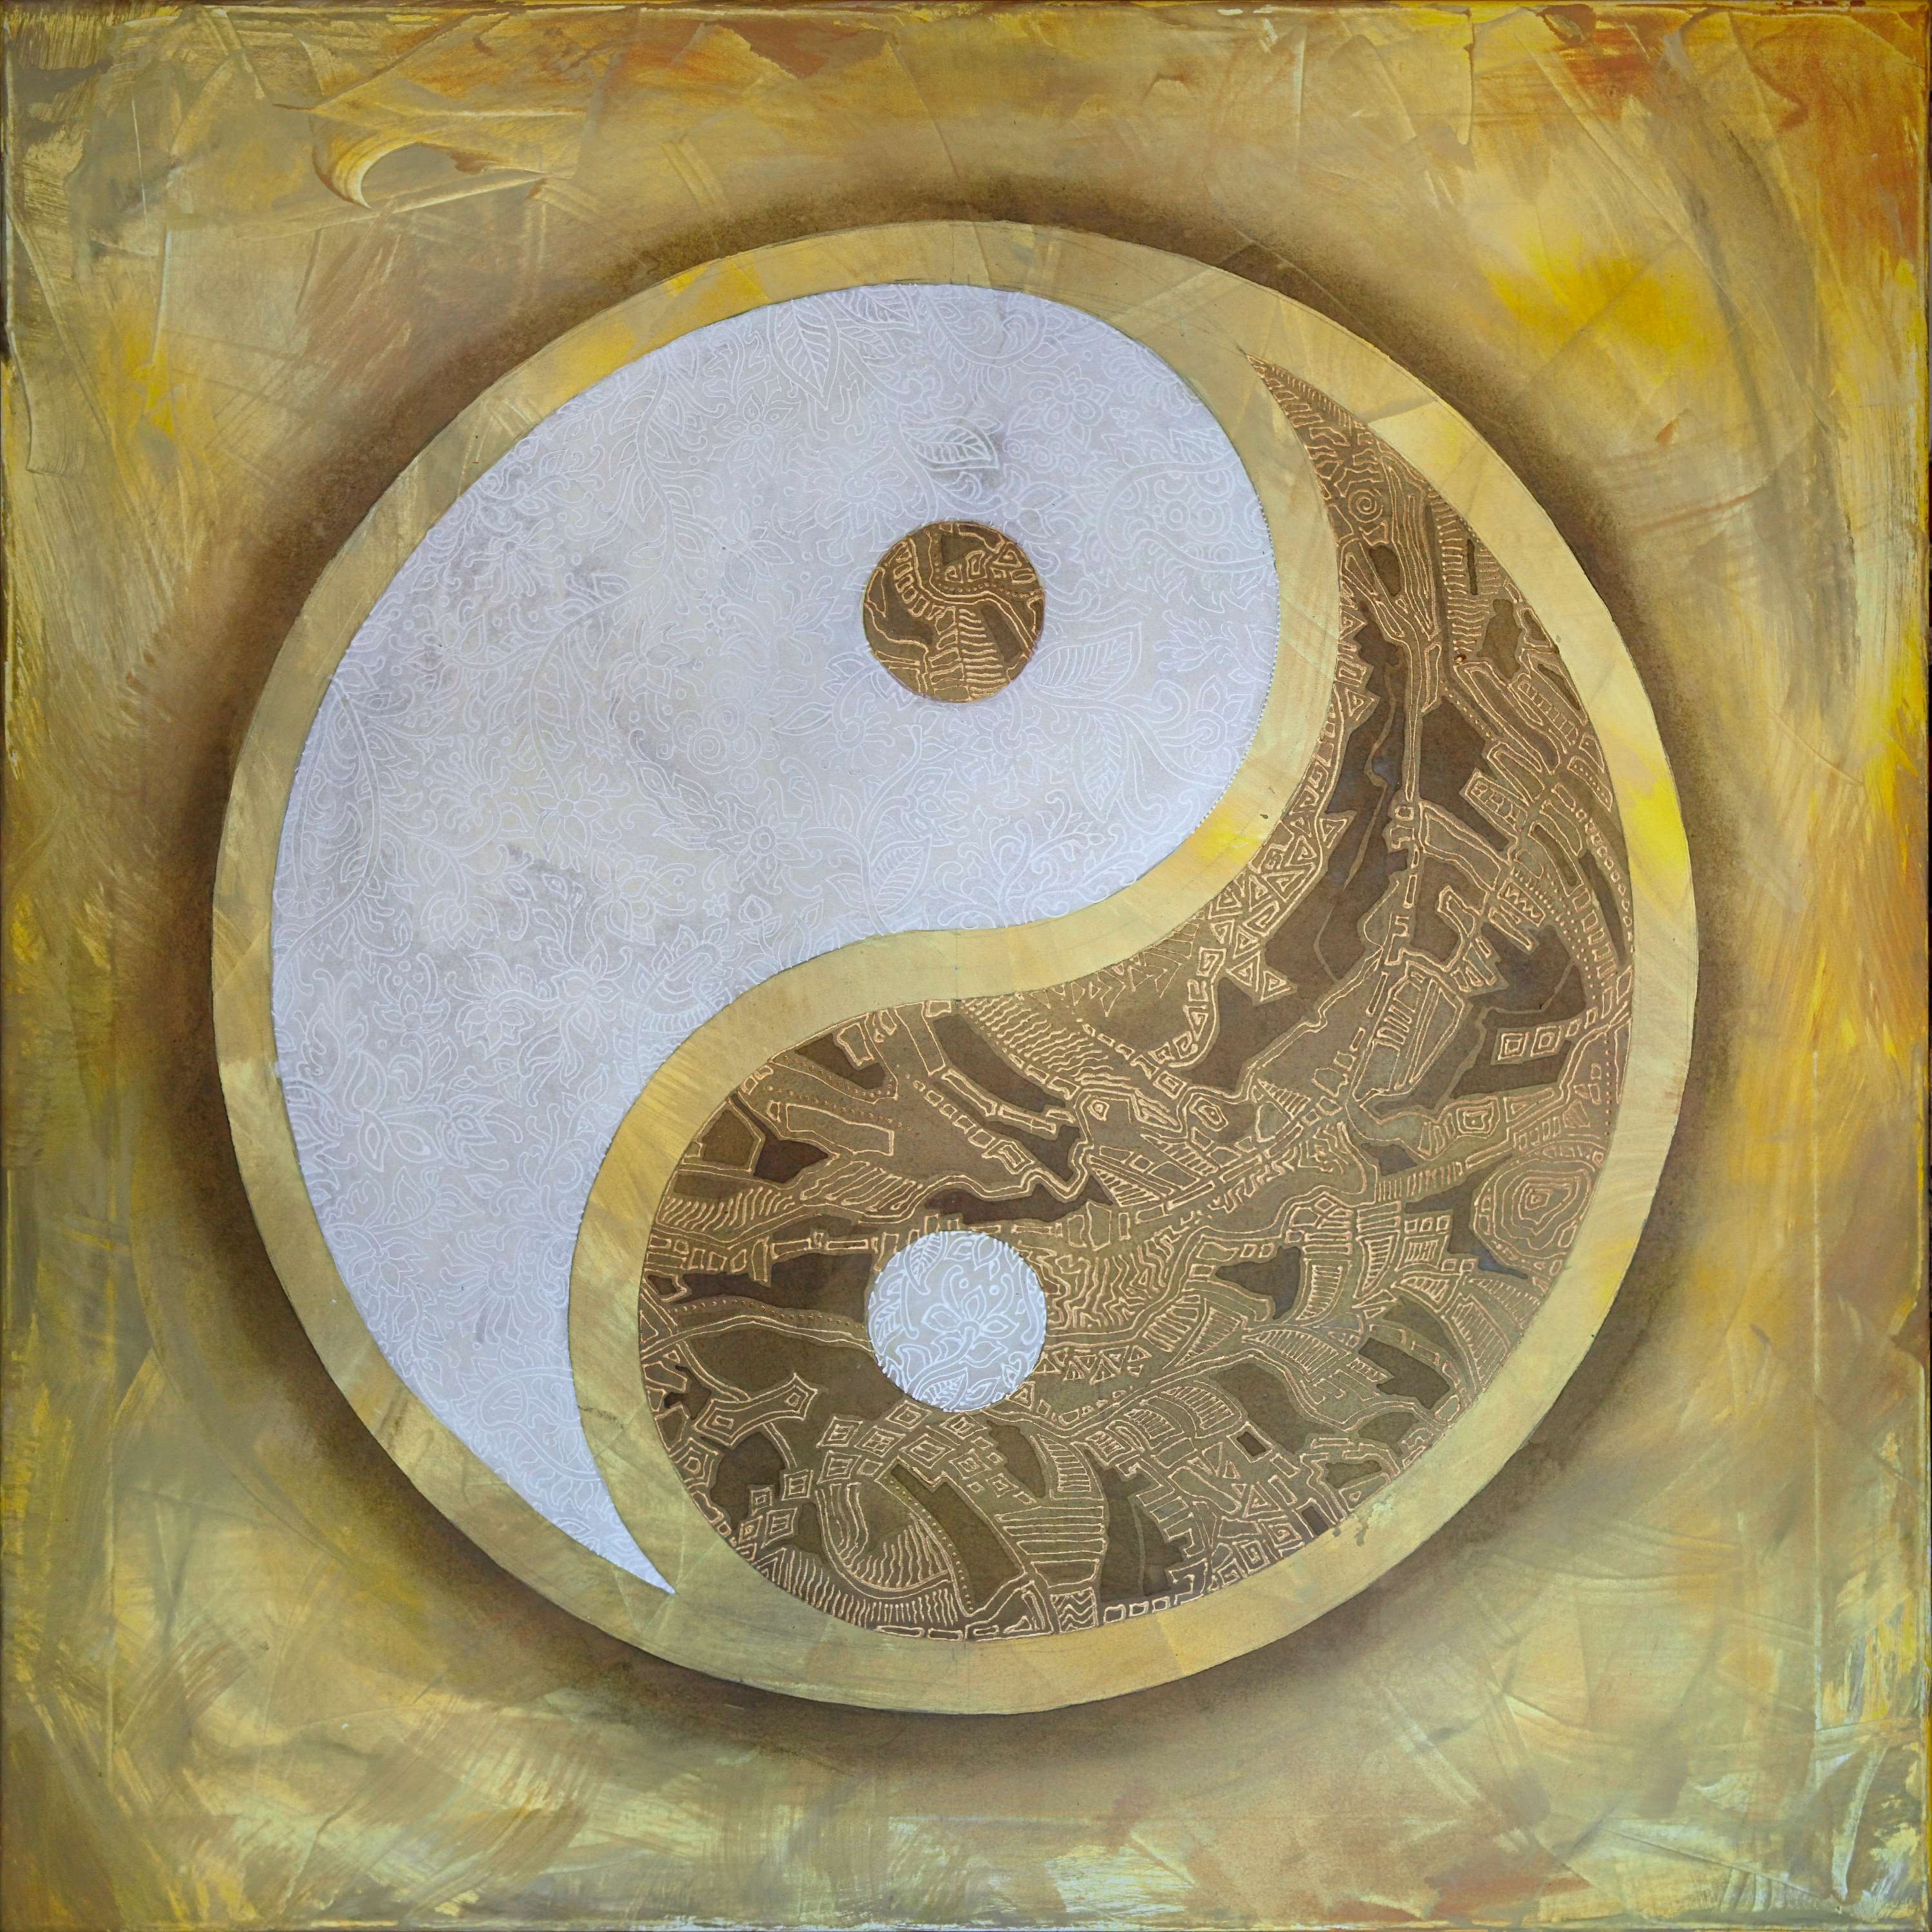 Yin and Yang as Journey Toward Harmony - The Hero's Journey